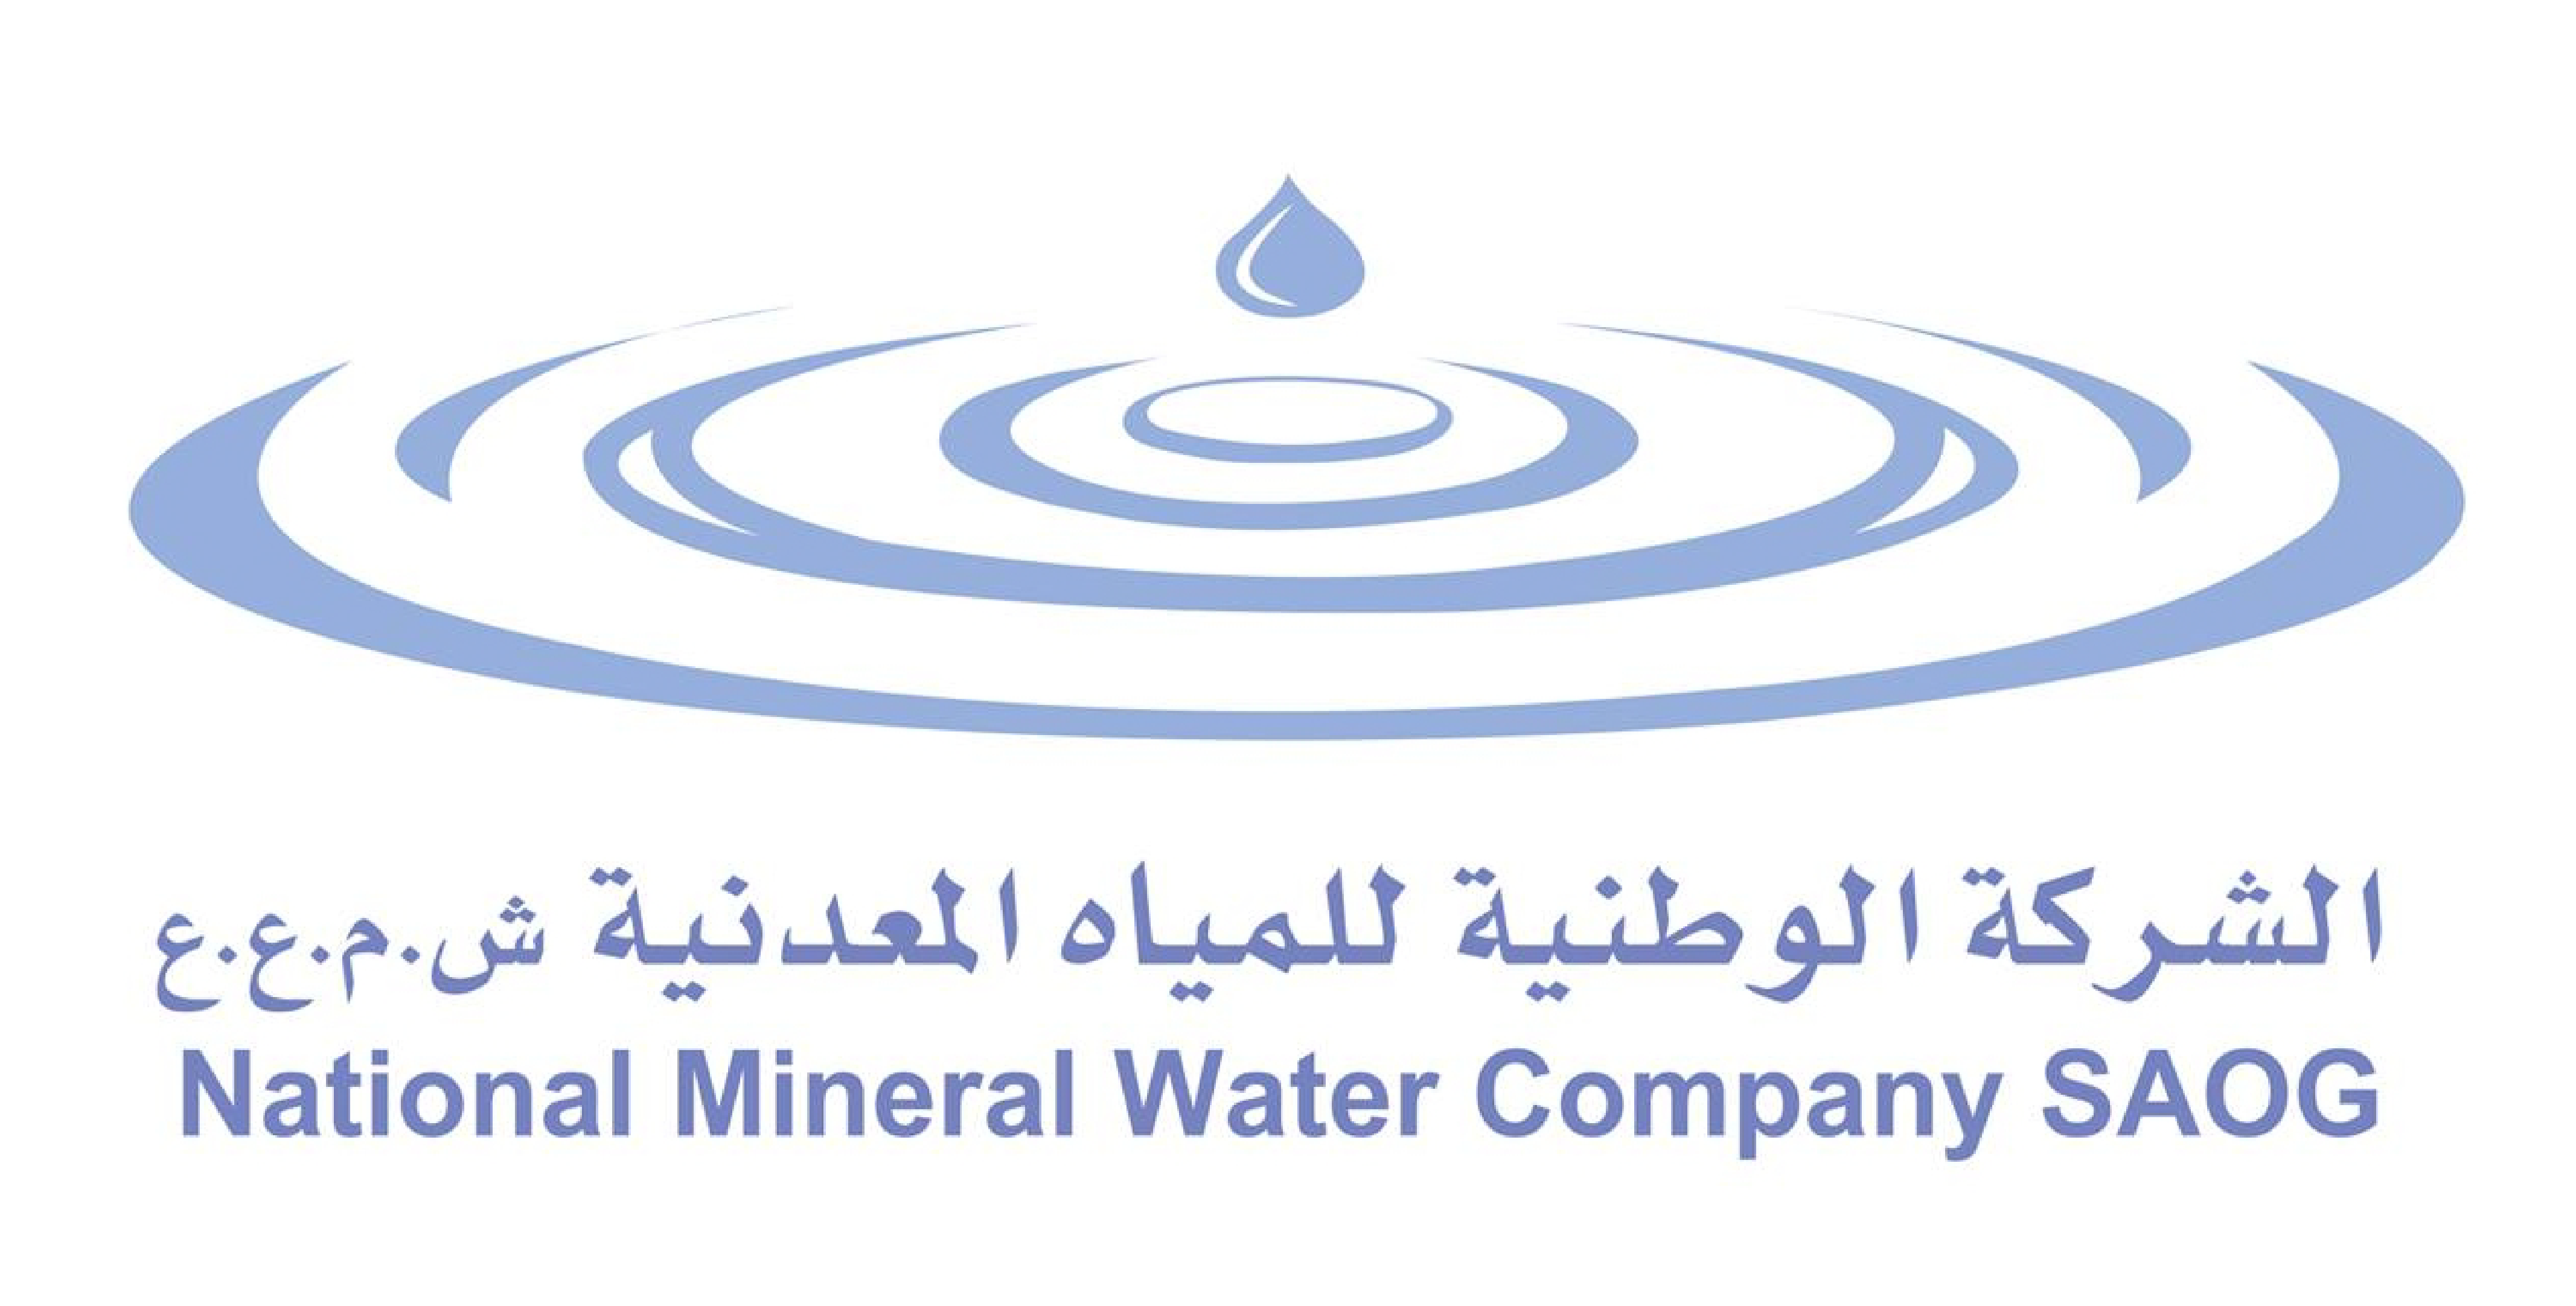 National Mineral Water Company SAOG